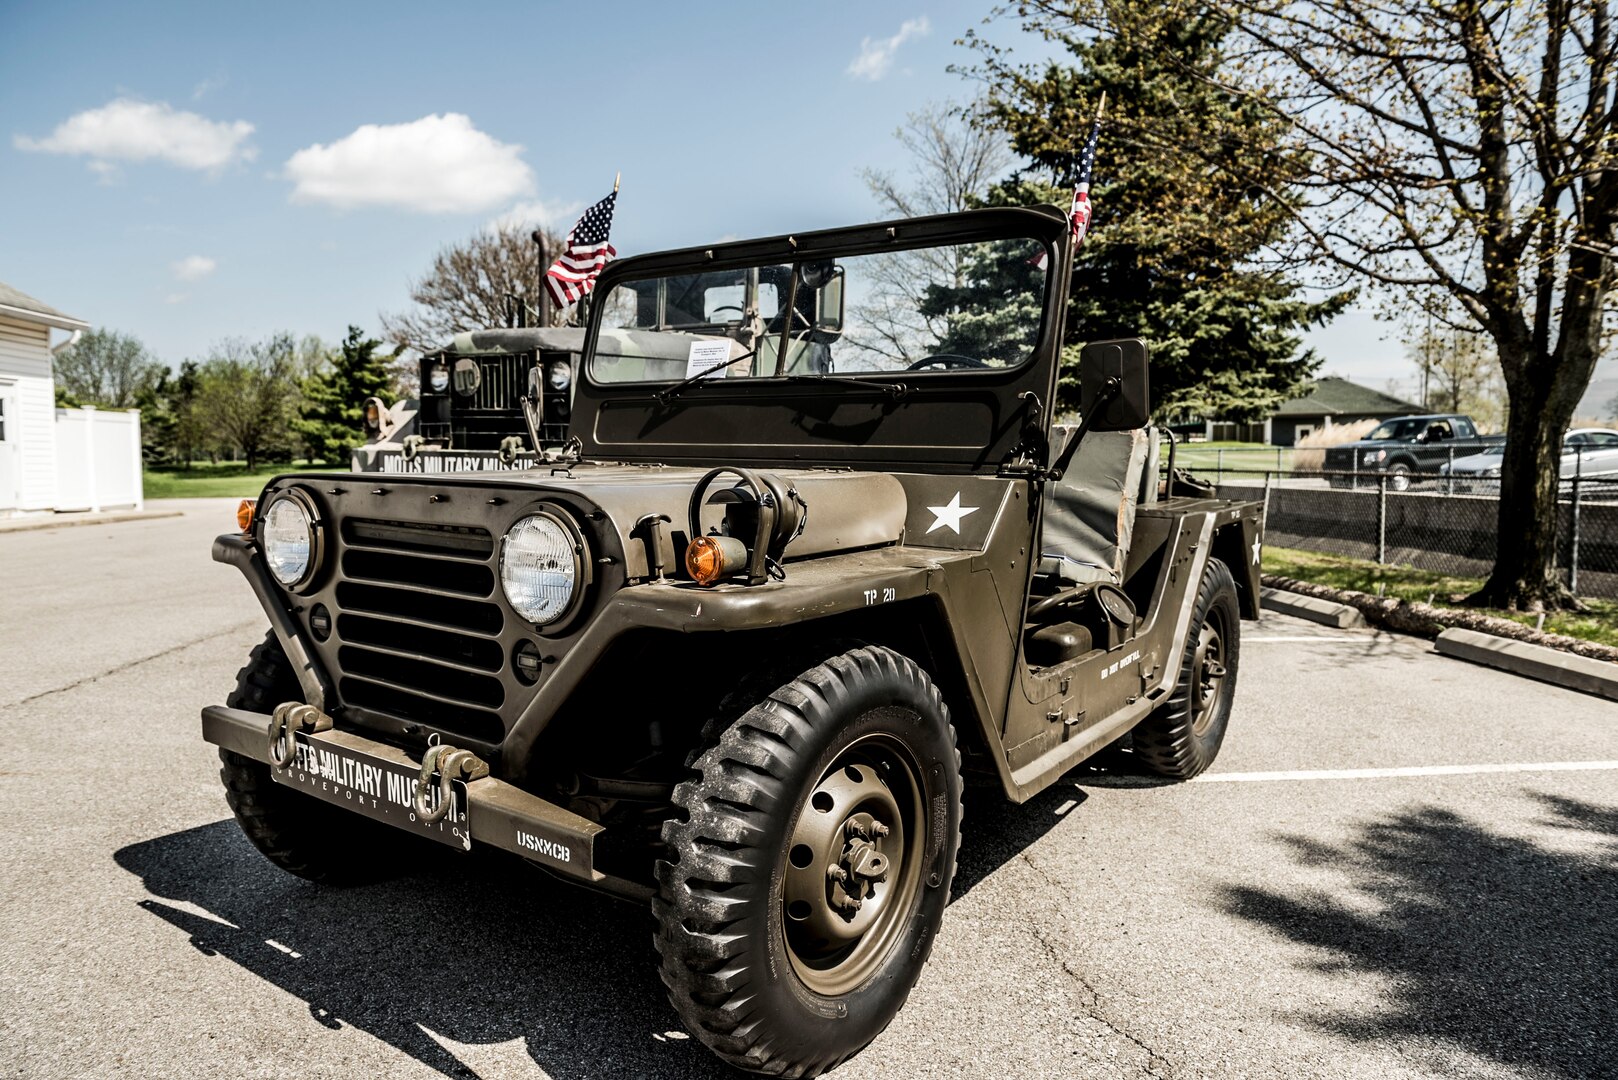 Military vehicle display